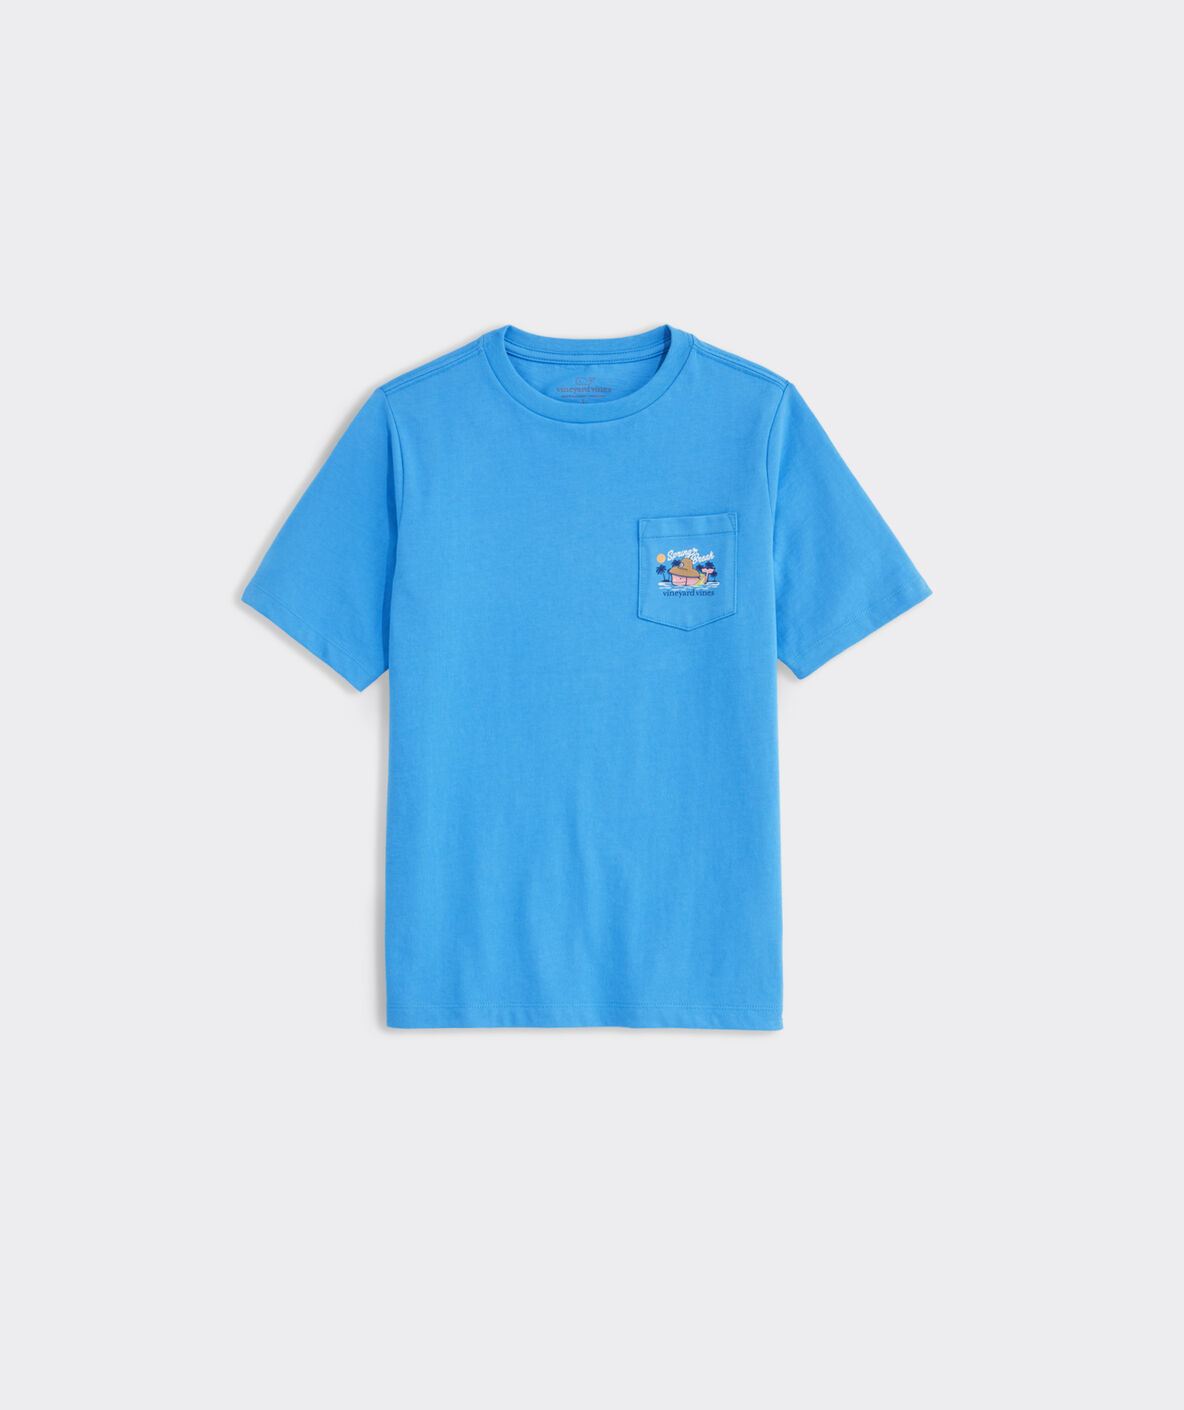 Shop Boys Fishing Rod Island T-Shirt at vineyard vines